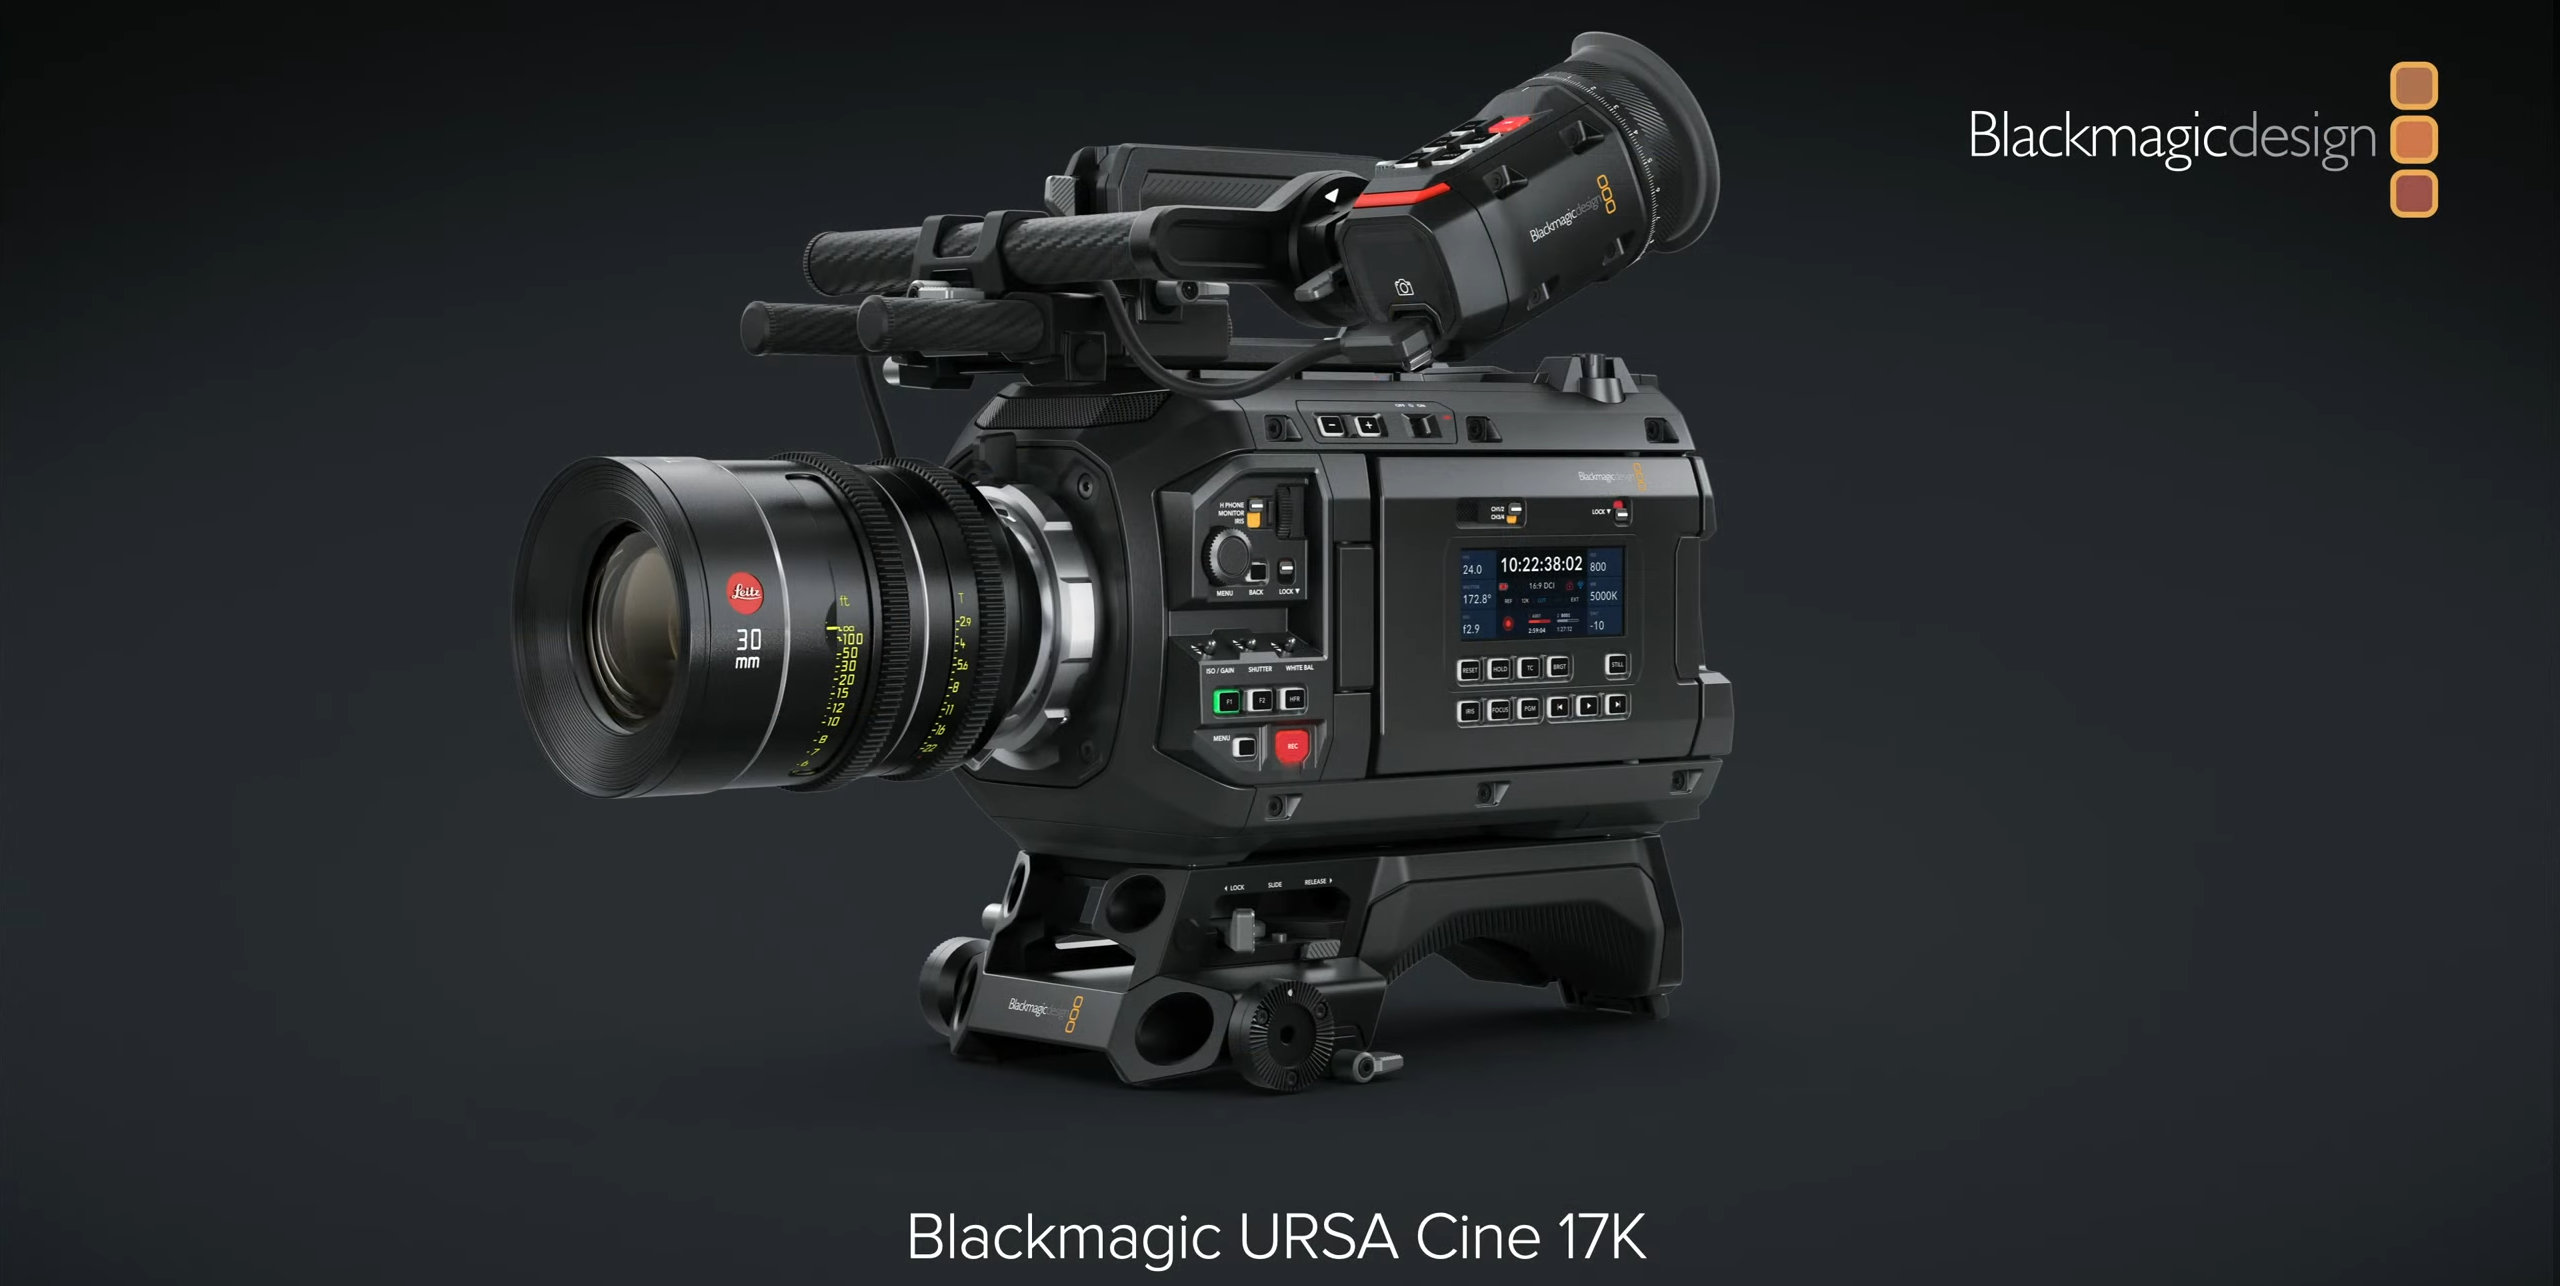 Blackmagic Design Ursa Cine 17K coming next